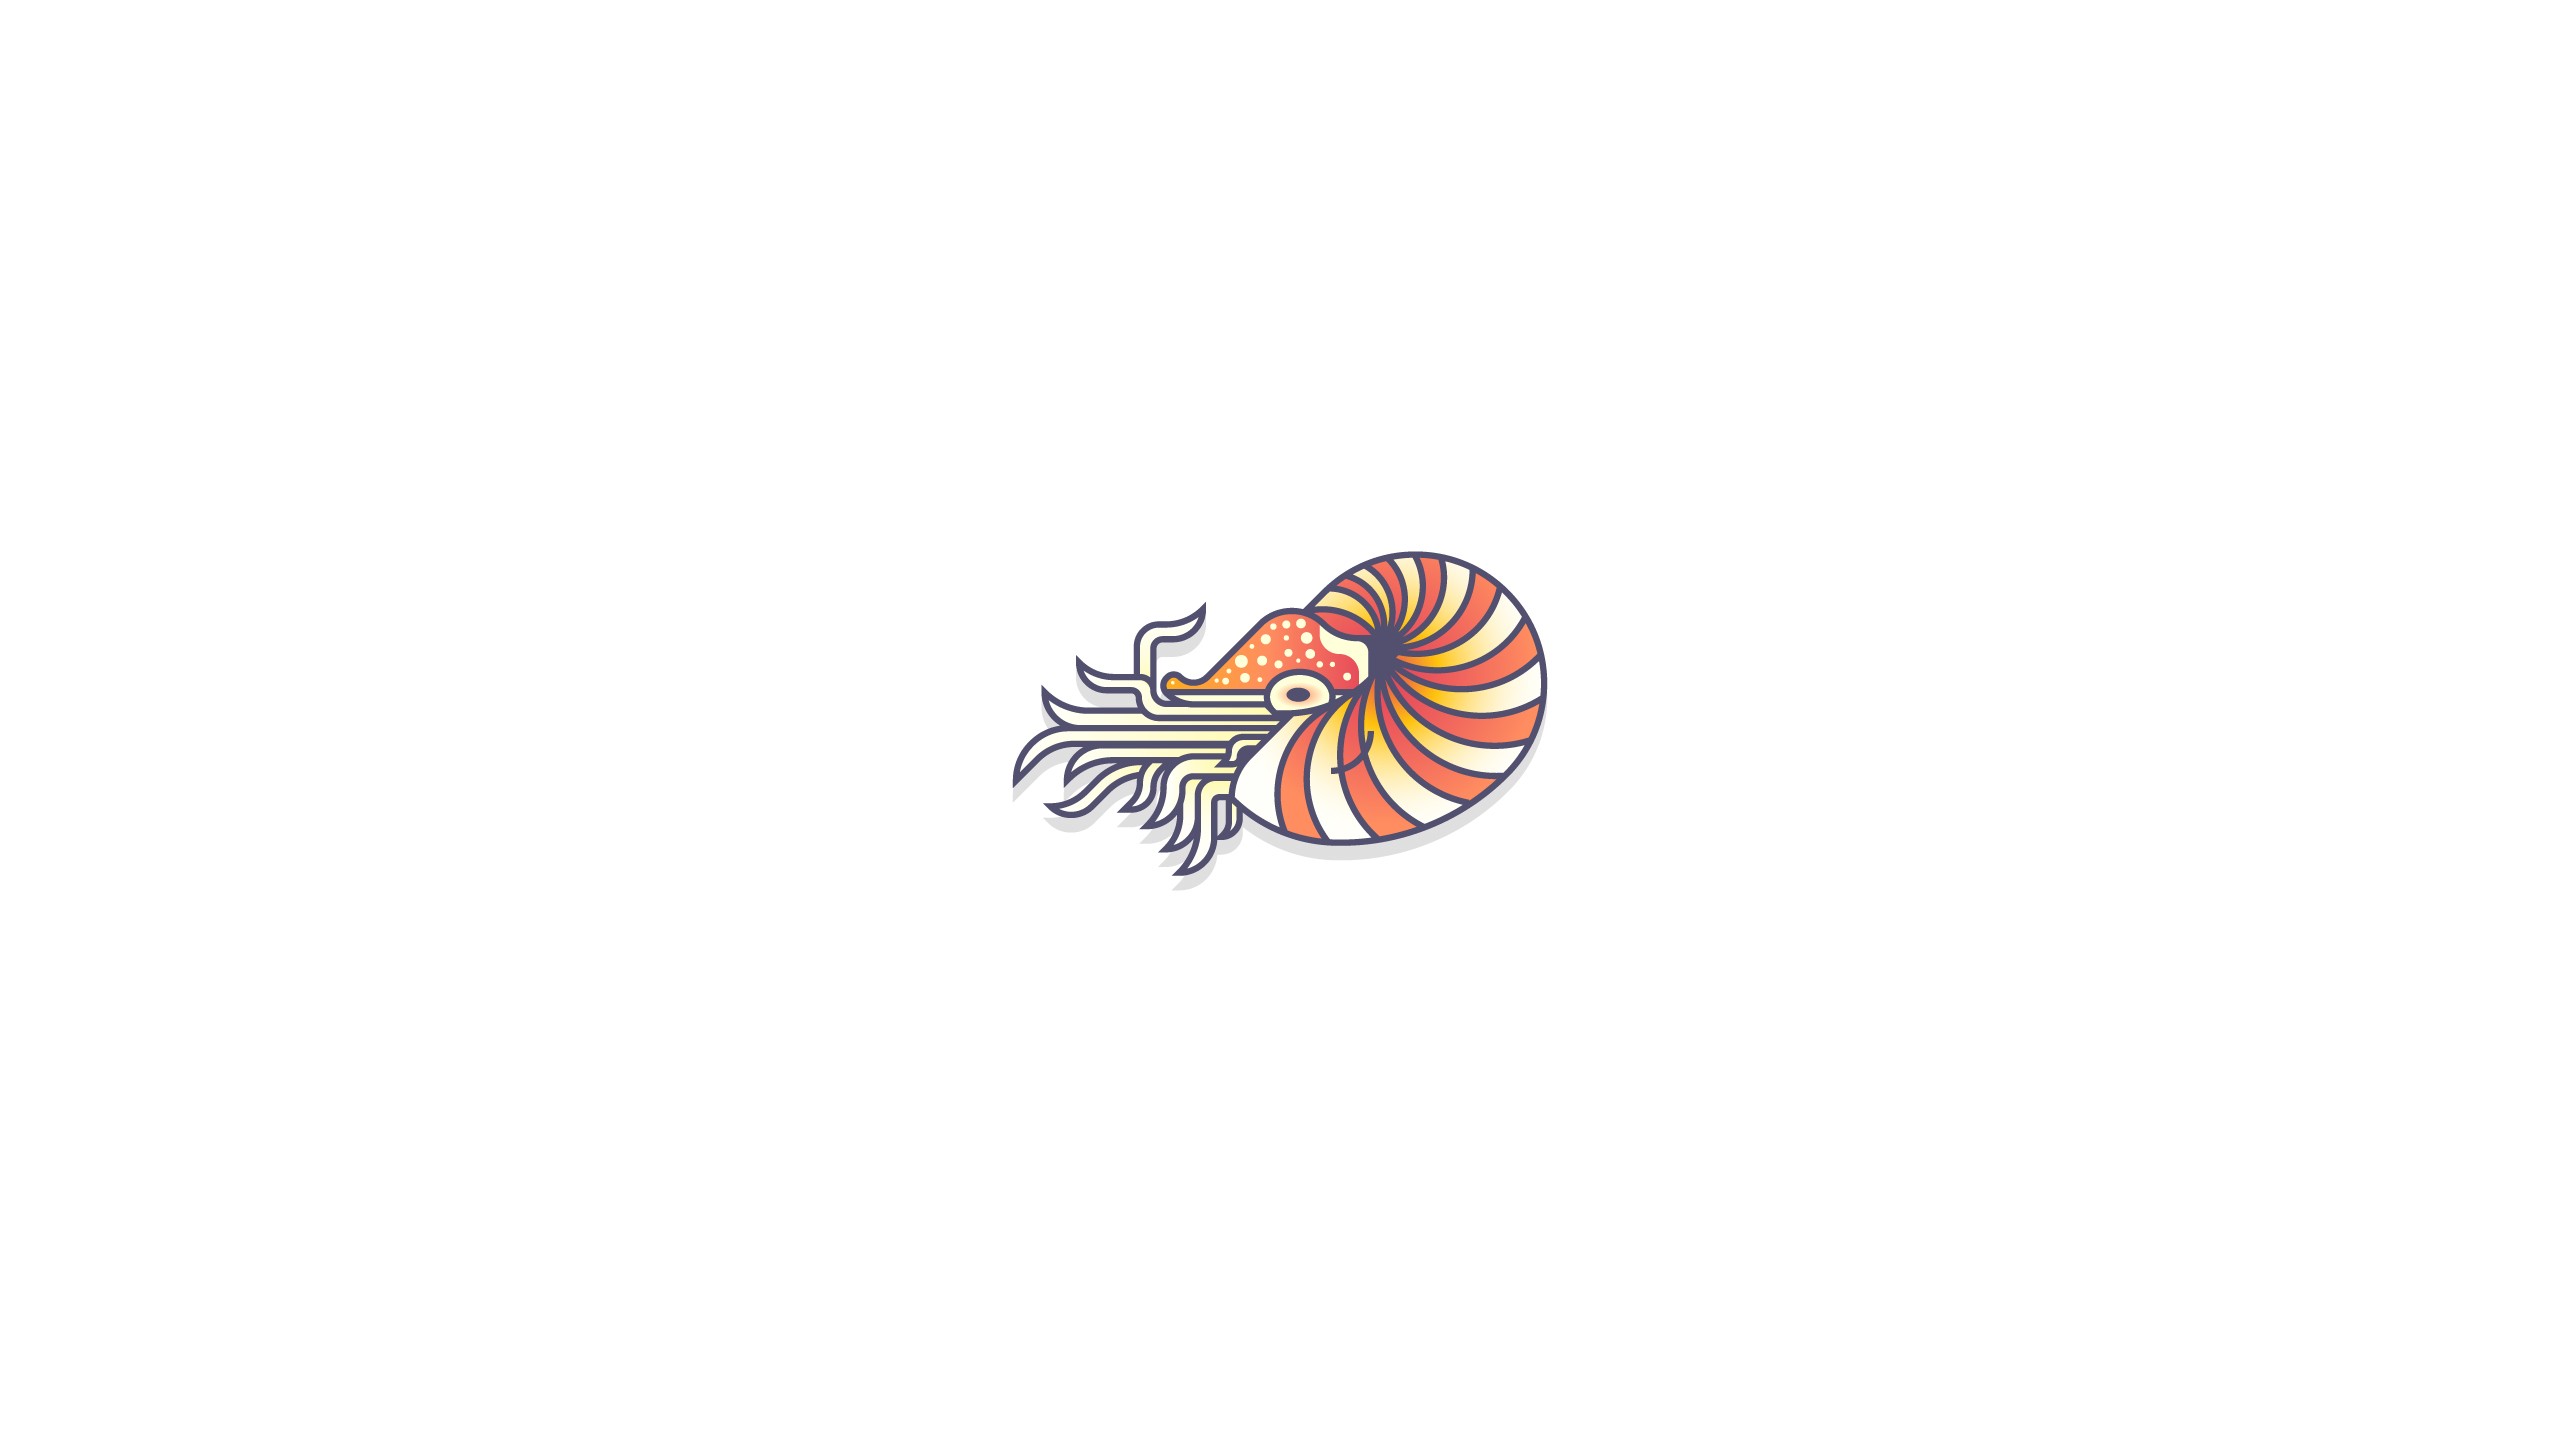 General 2560x1440 minimalism digital art simple background shrimp white background animals illustration